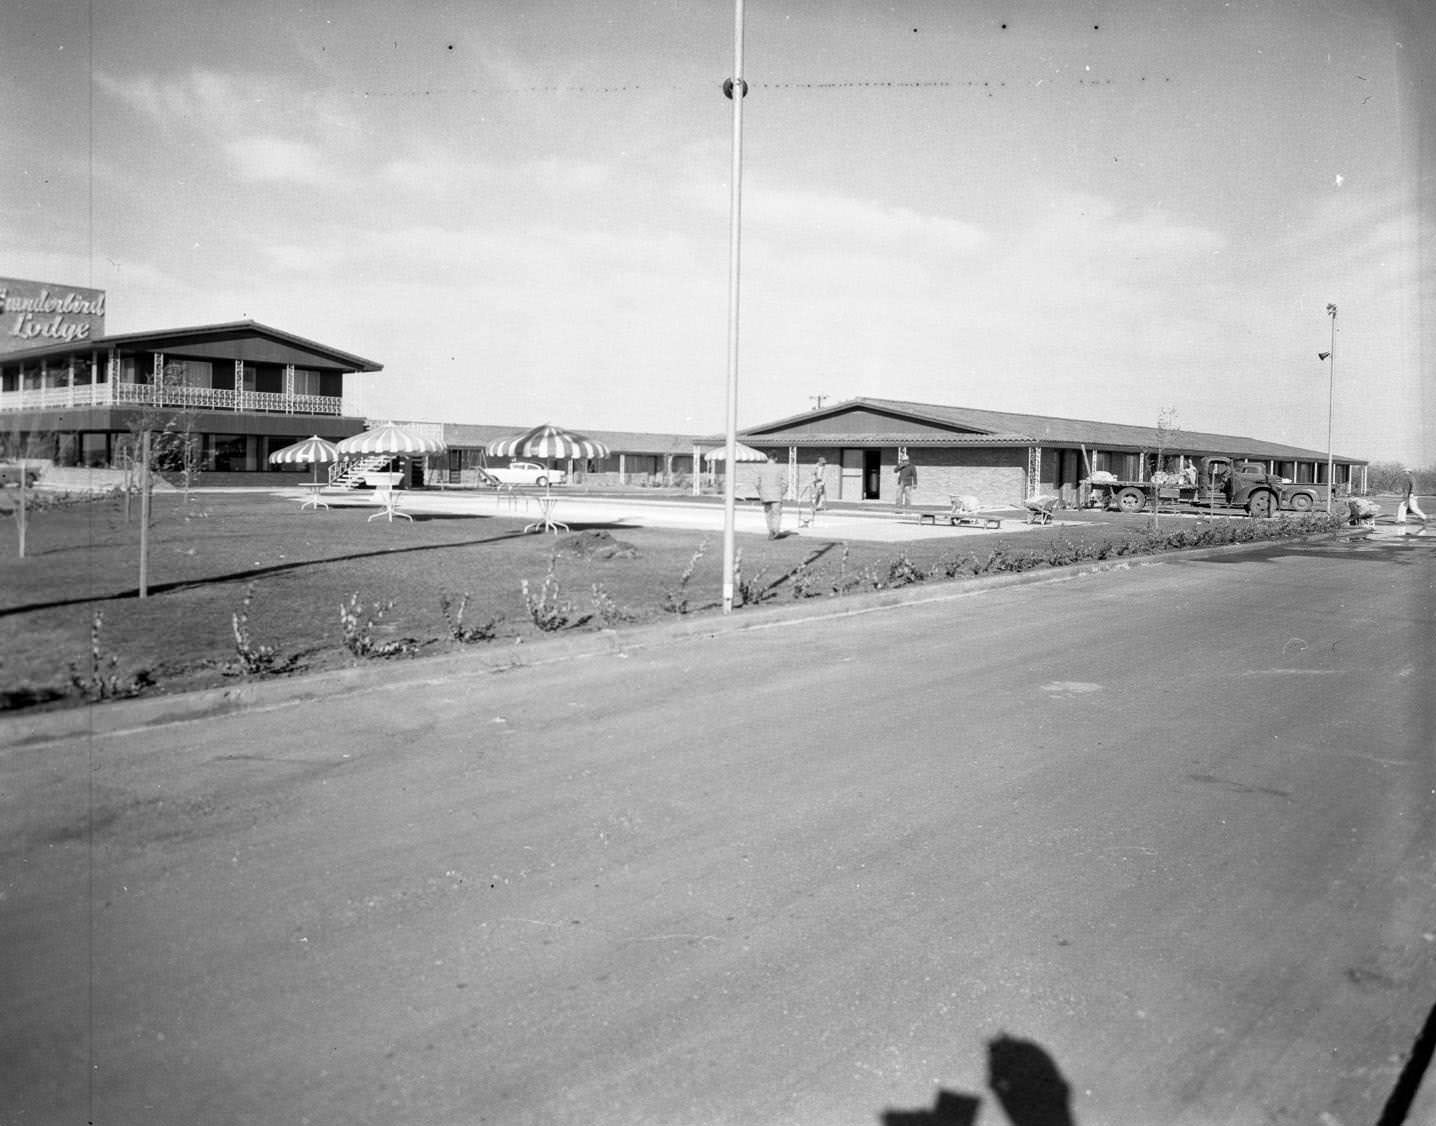 An exterior view of Thunderbird Lodge, 1956